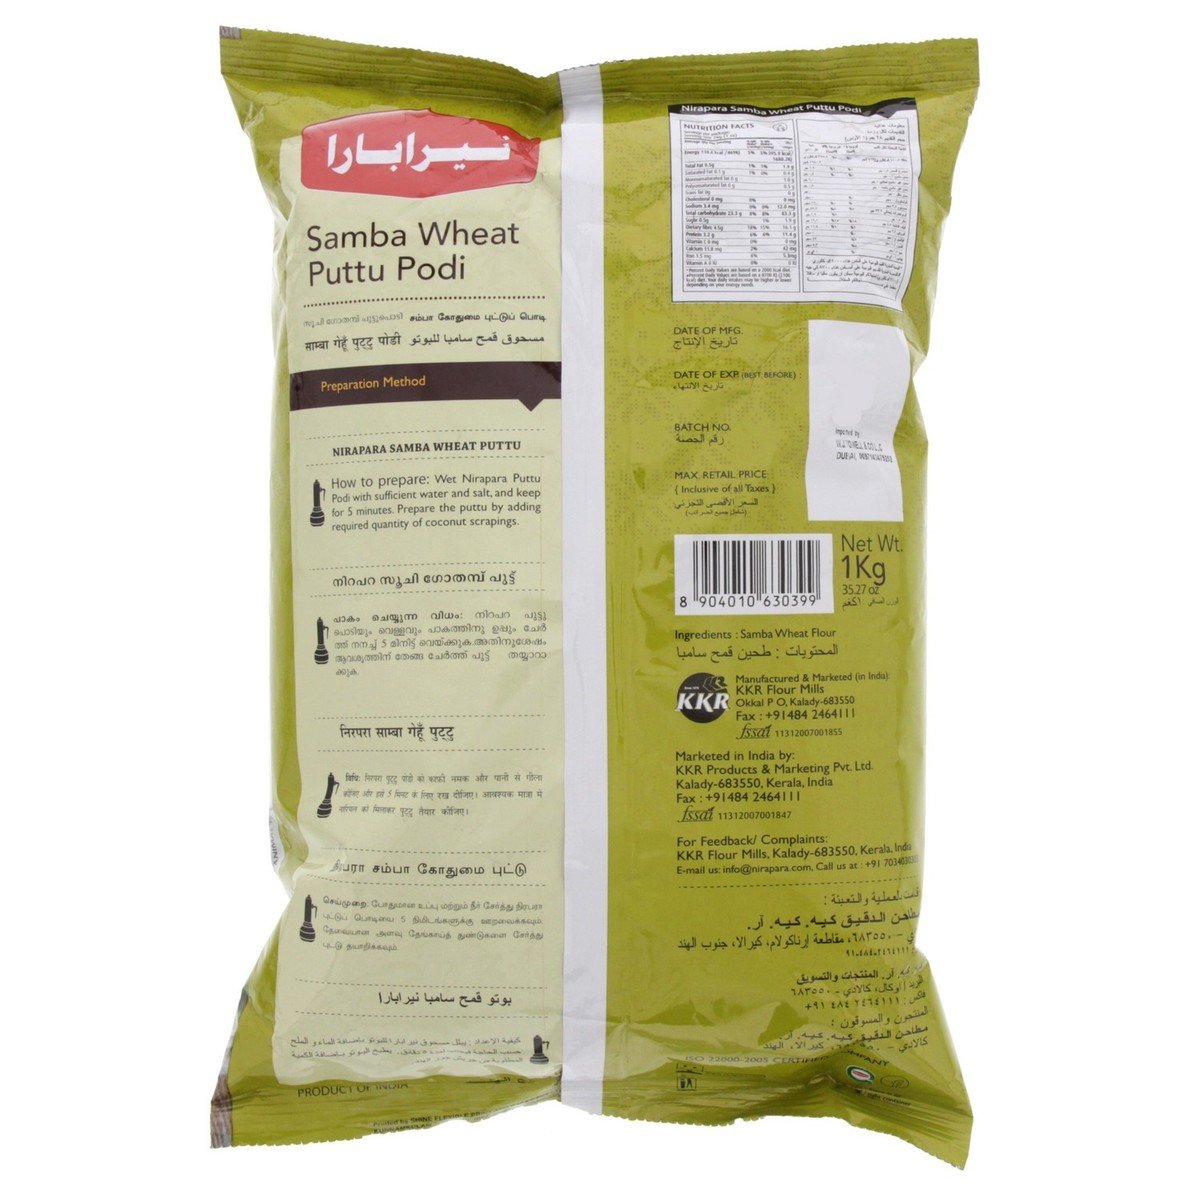 Nirapara Samba Wheat Puttu Podi 1 Kg